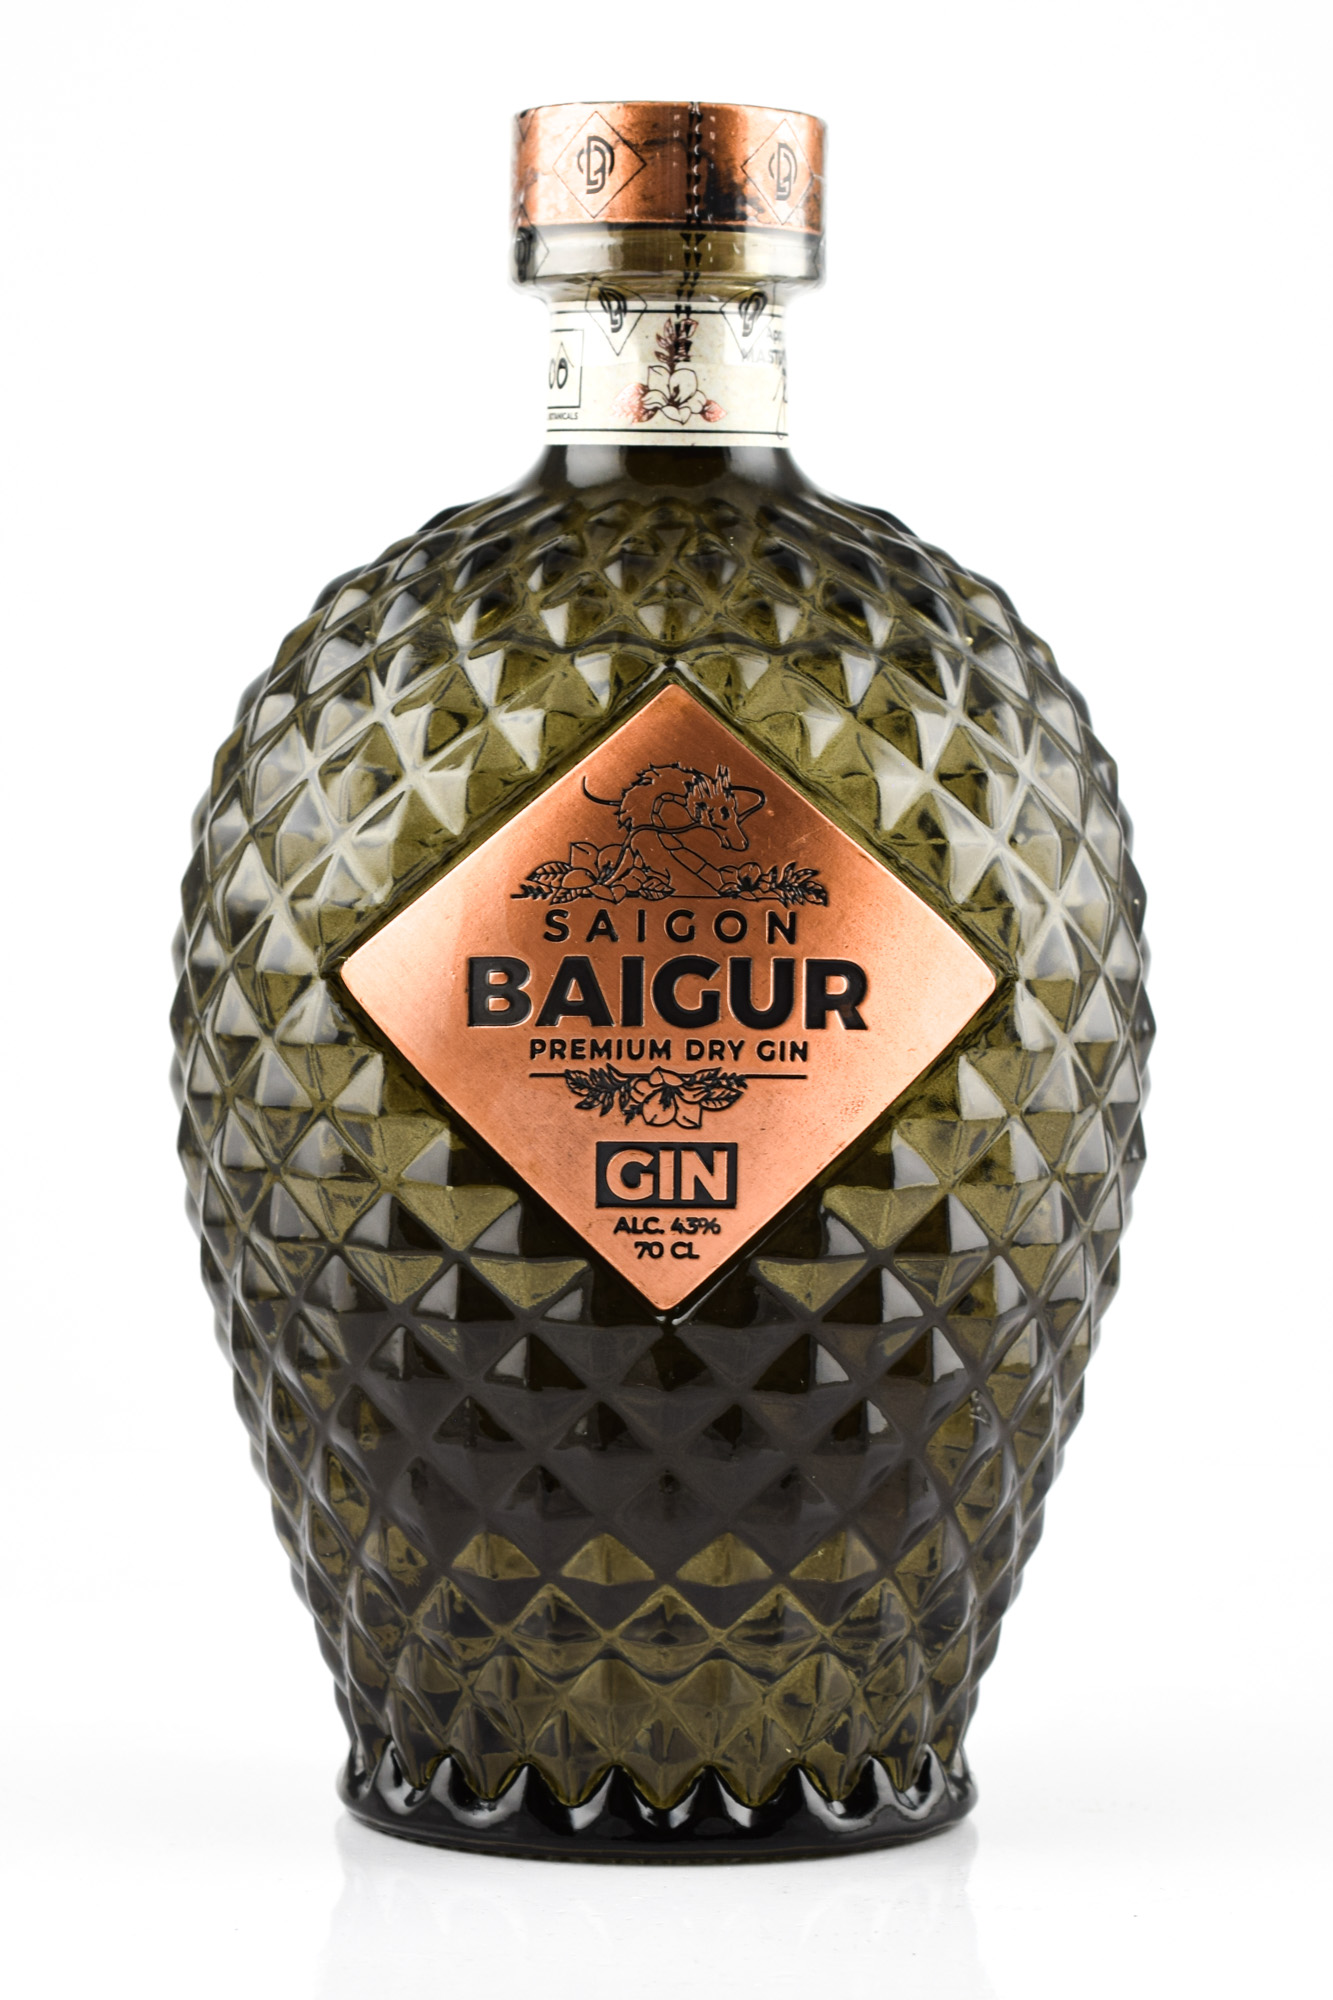 Saigon Baigur Premium Dry Home explore of at Malts >> of | Home Malts now! Gin